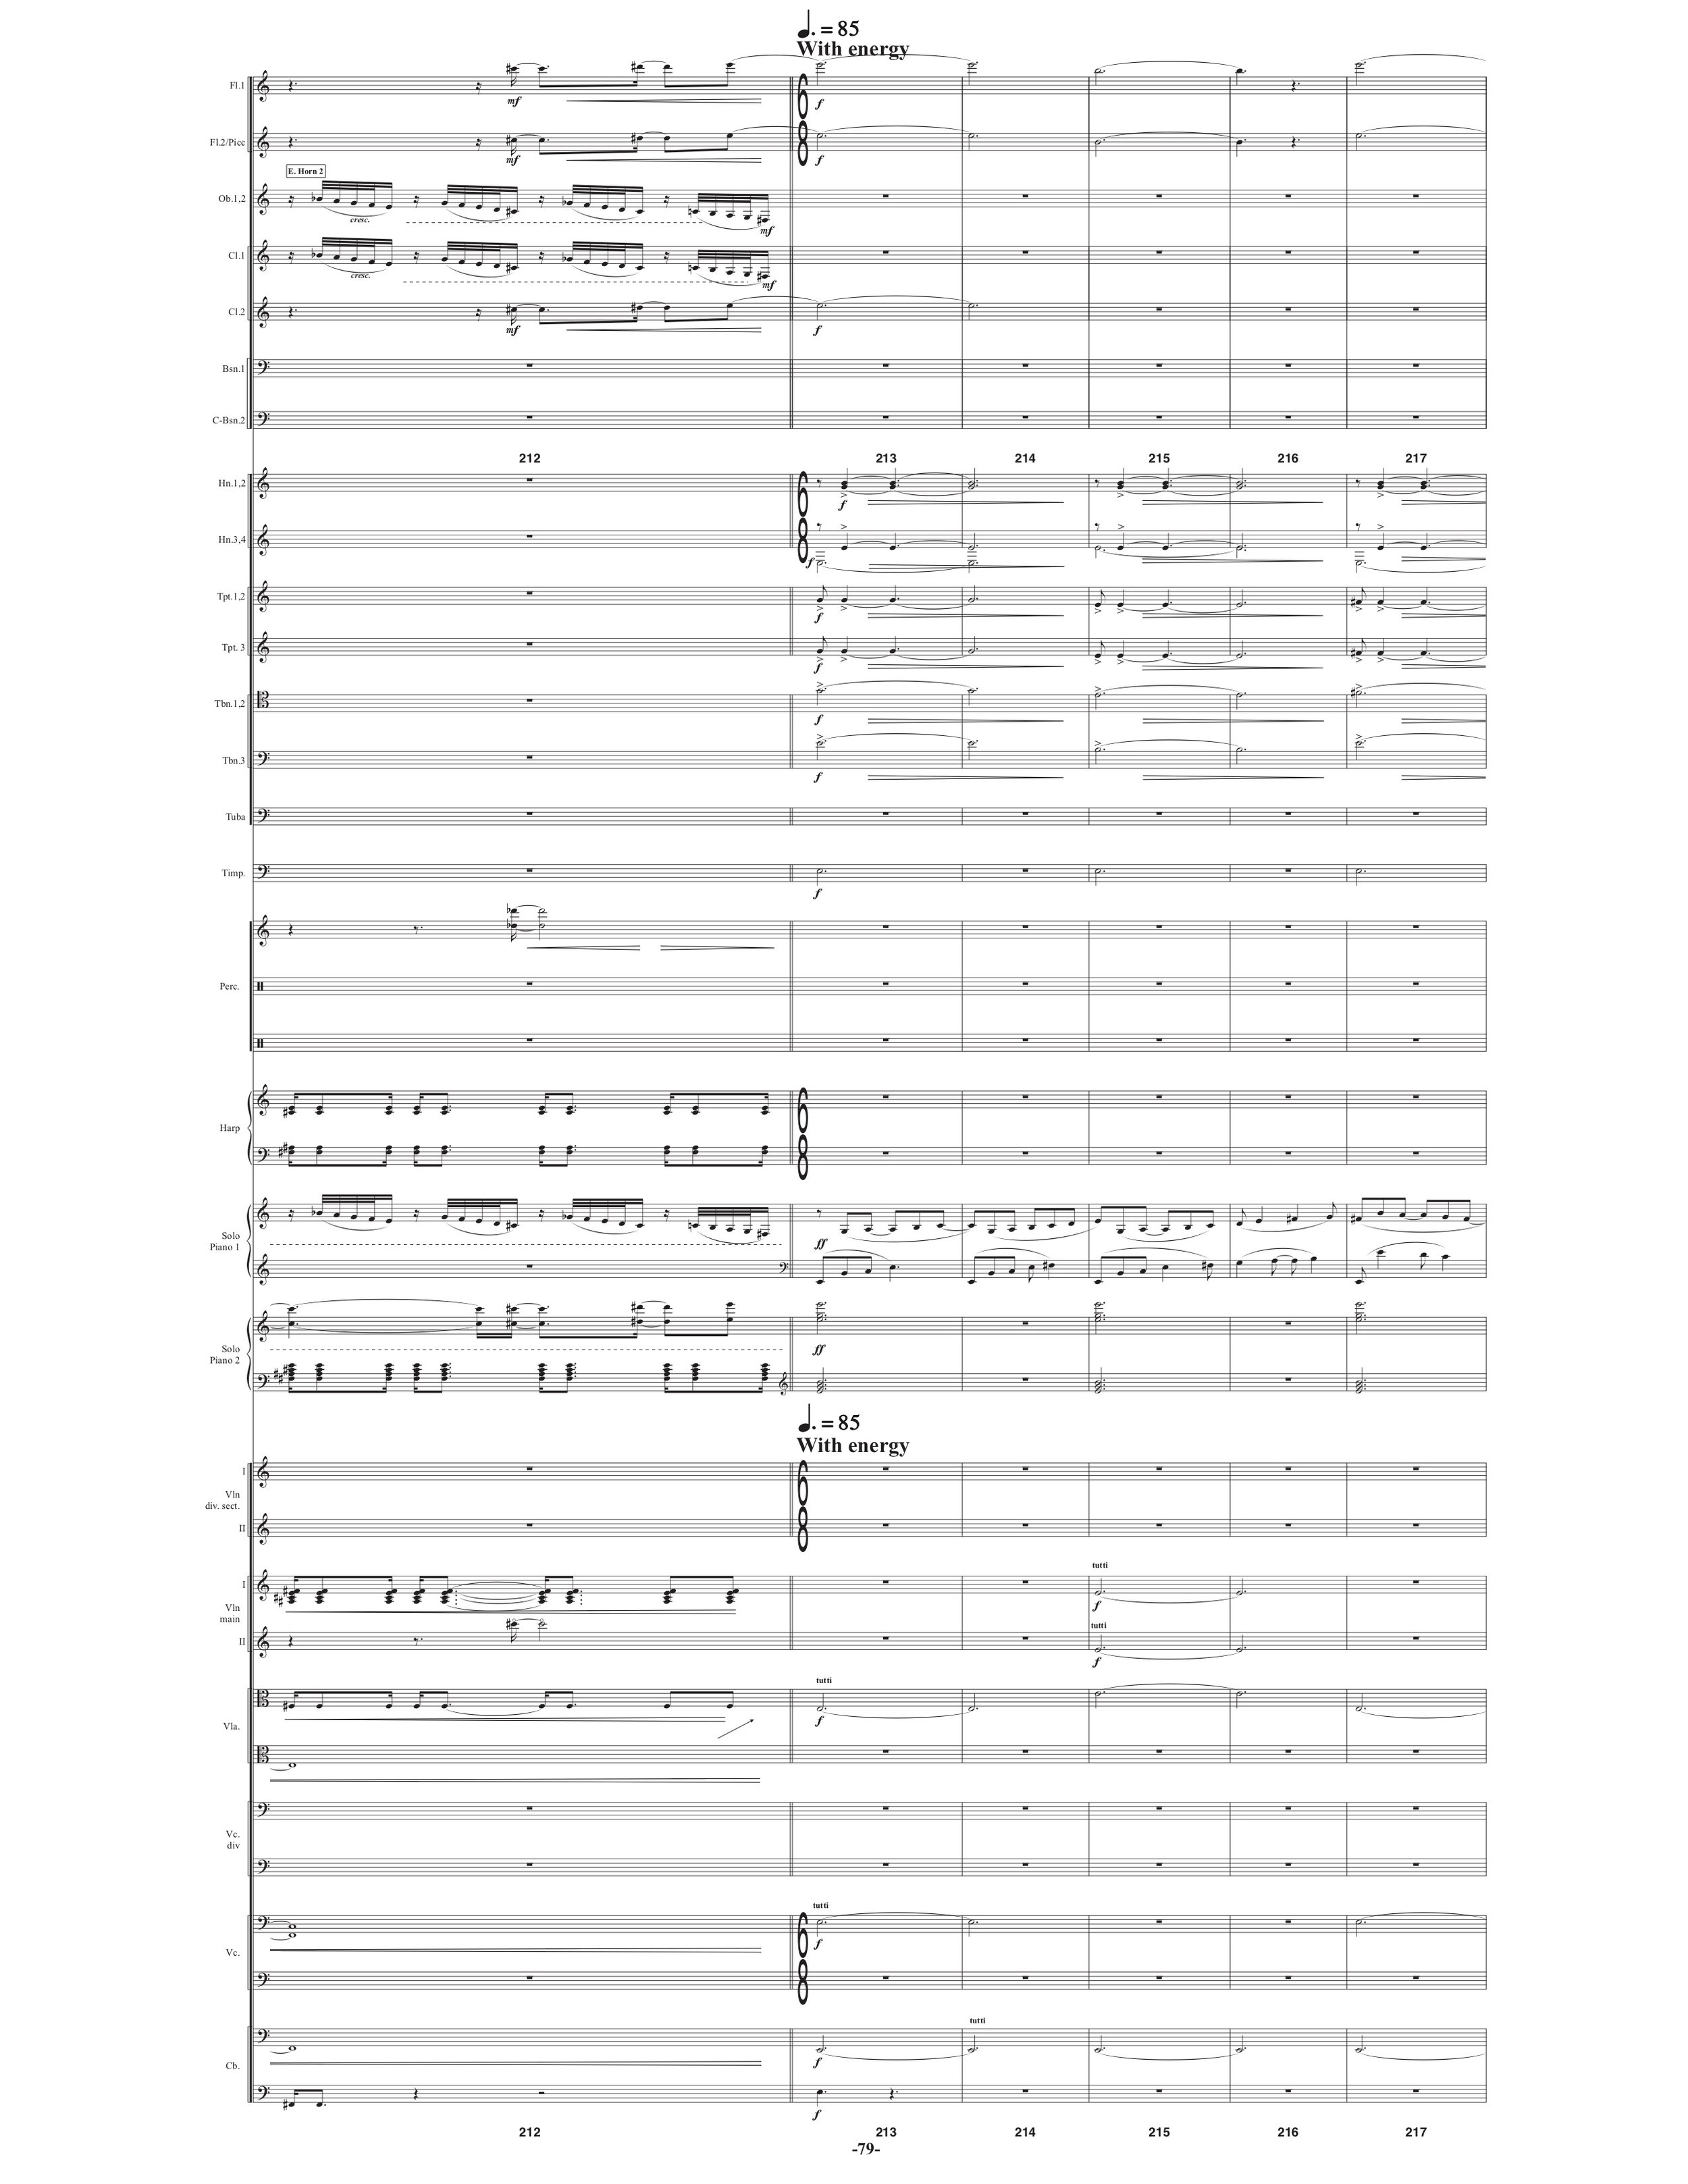 Symphony_Orch & 2 Pianos p84.jpg